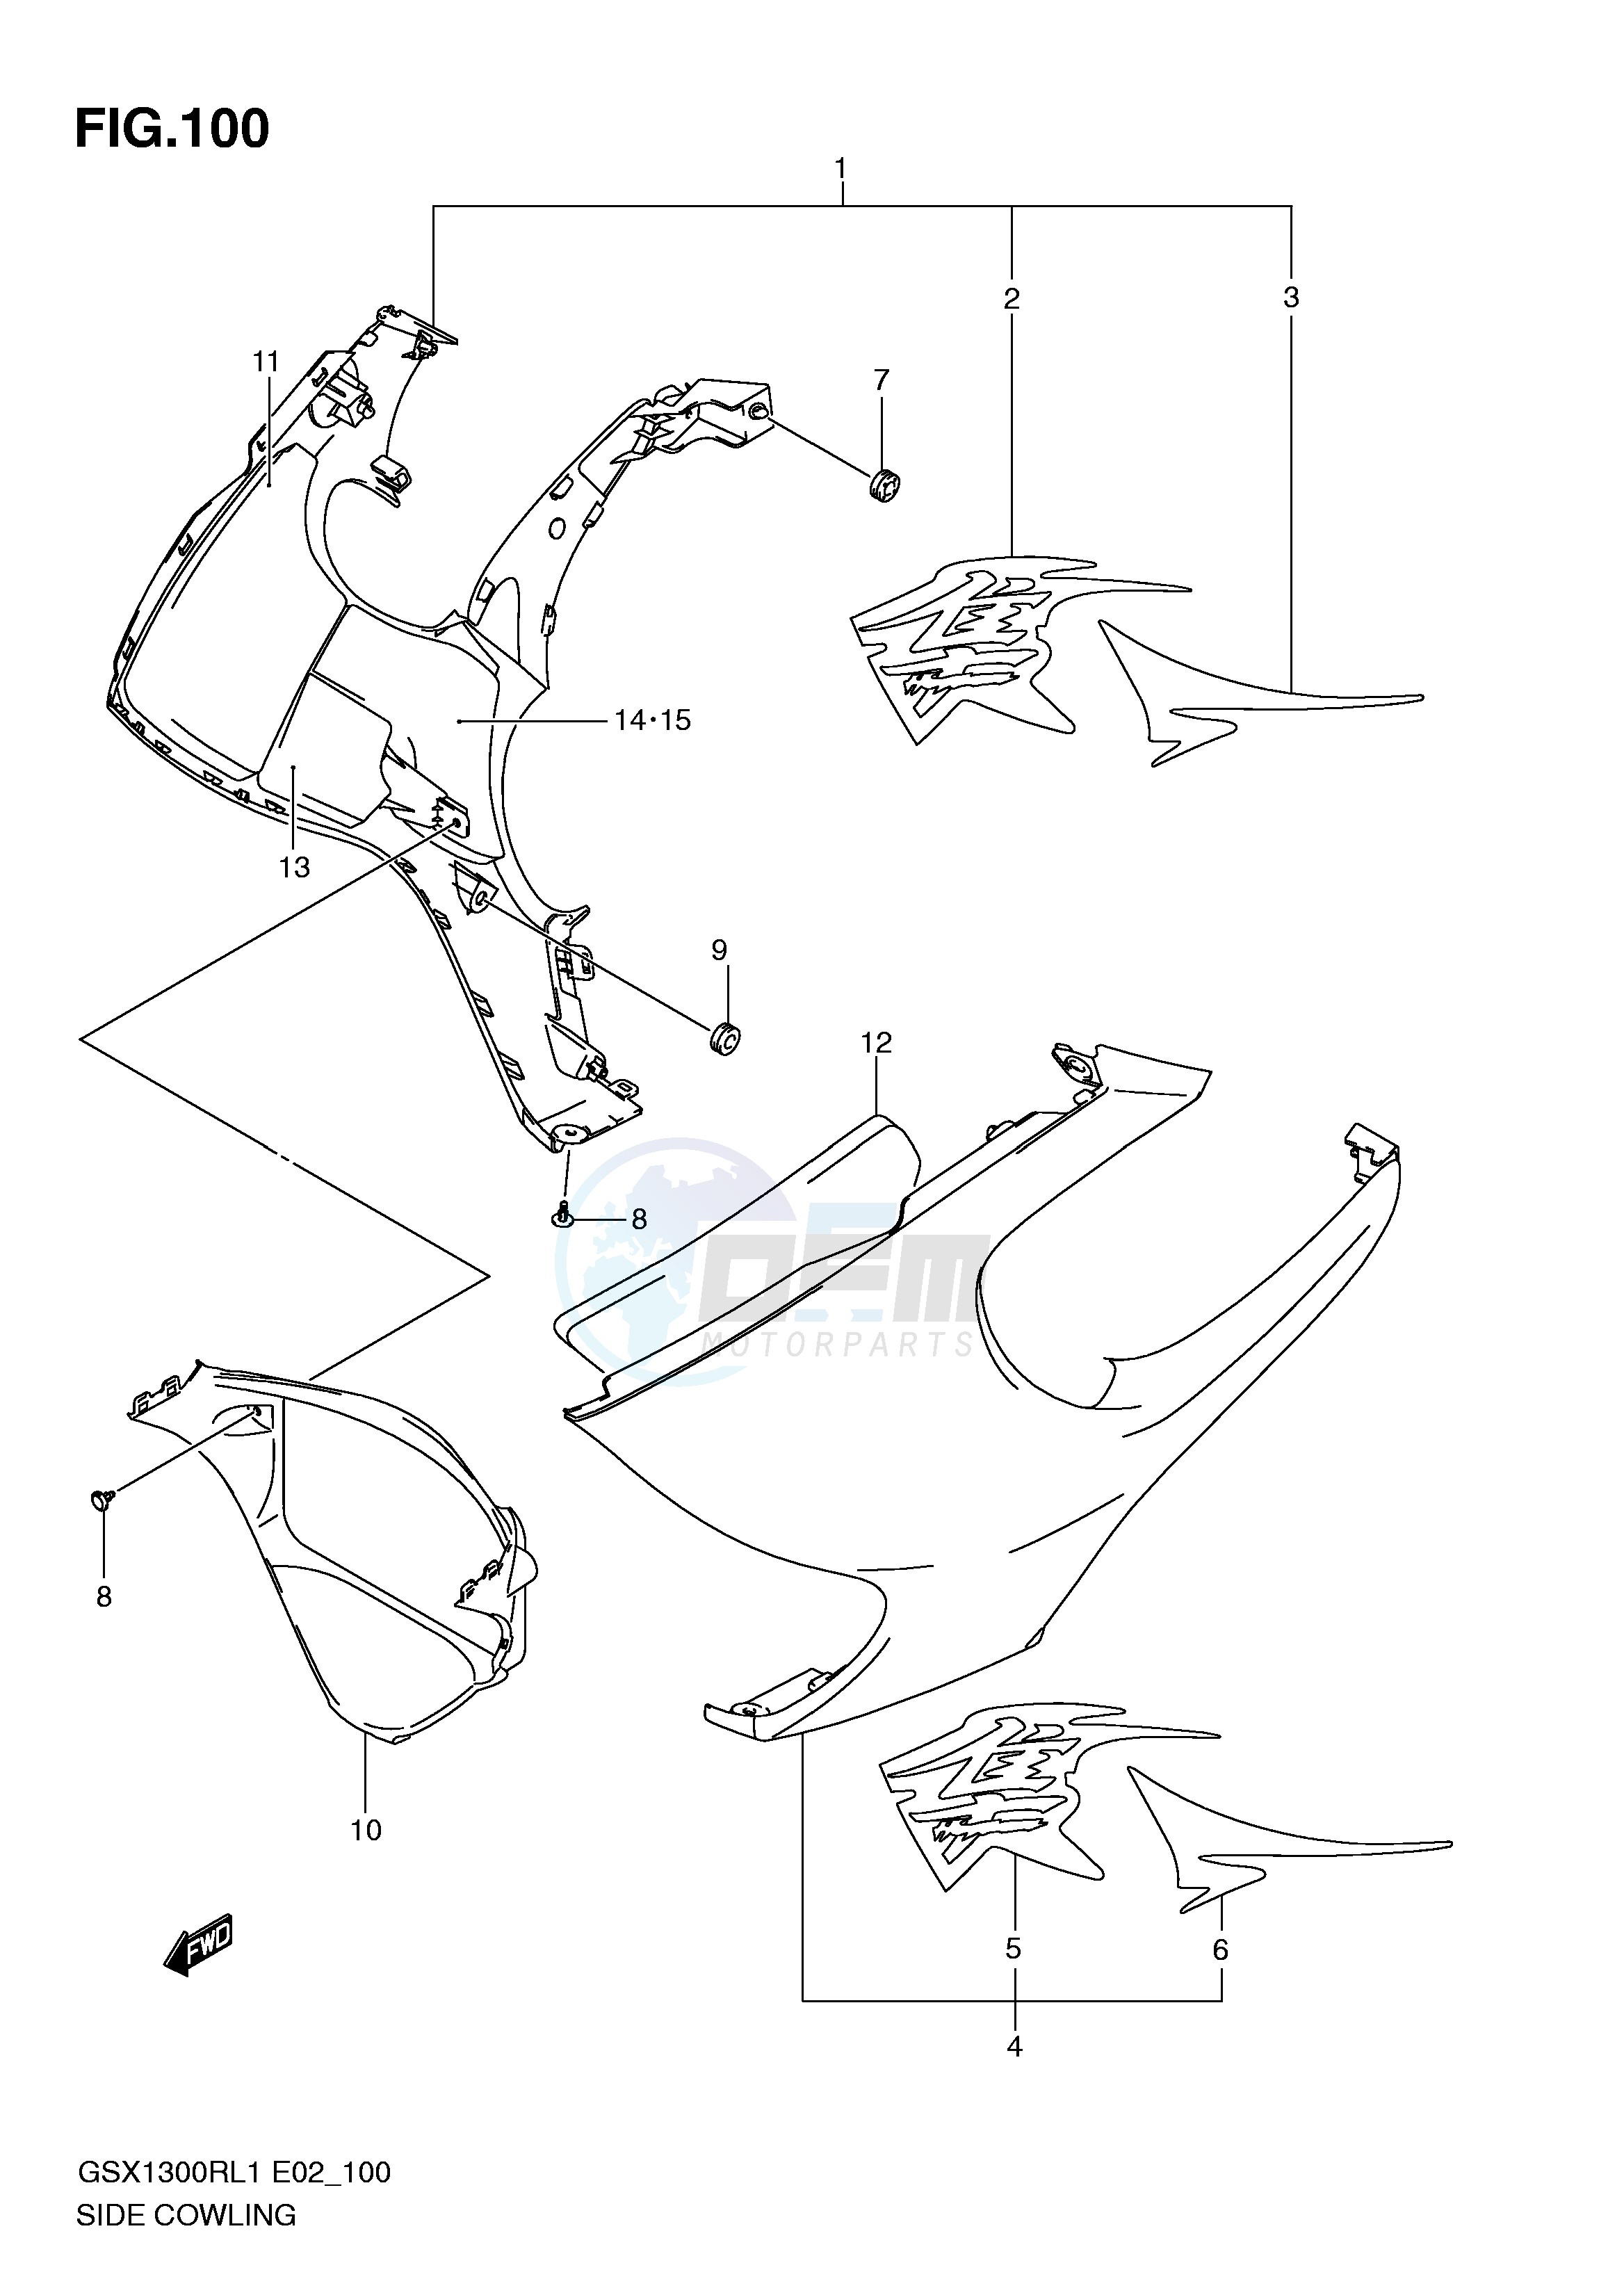 SIDE COWLING (GSX1300RL1 E19) blueprint